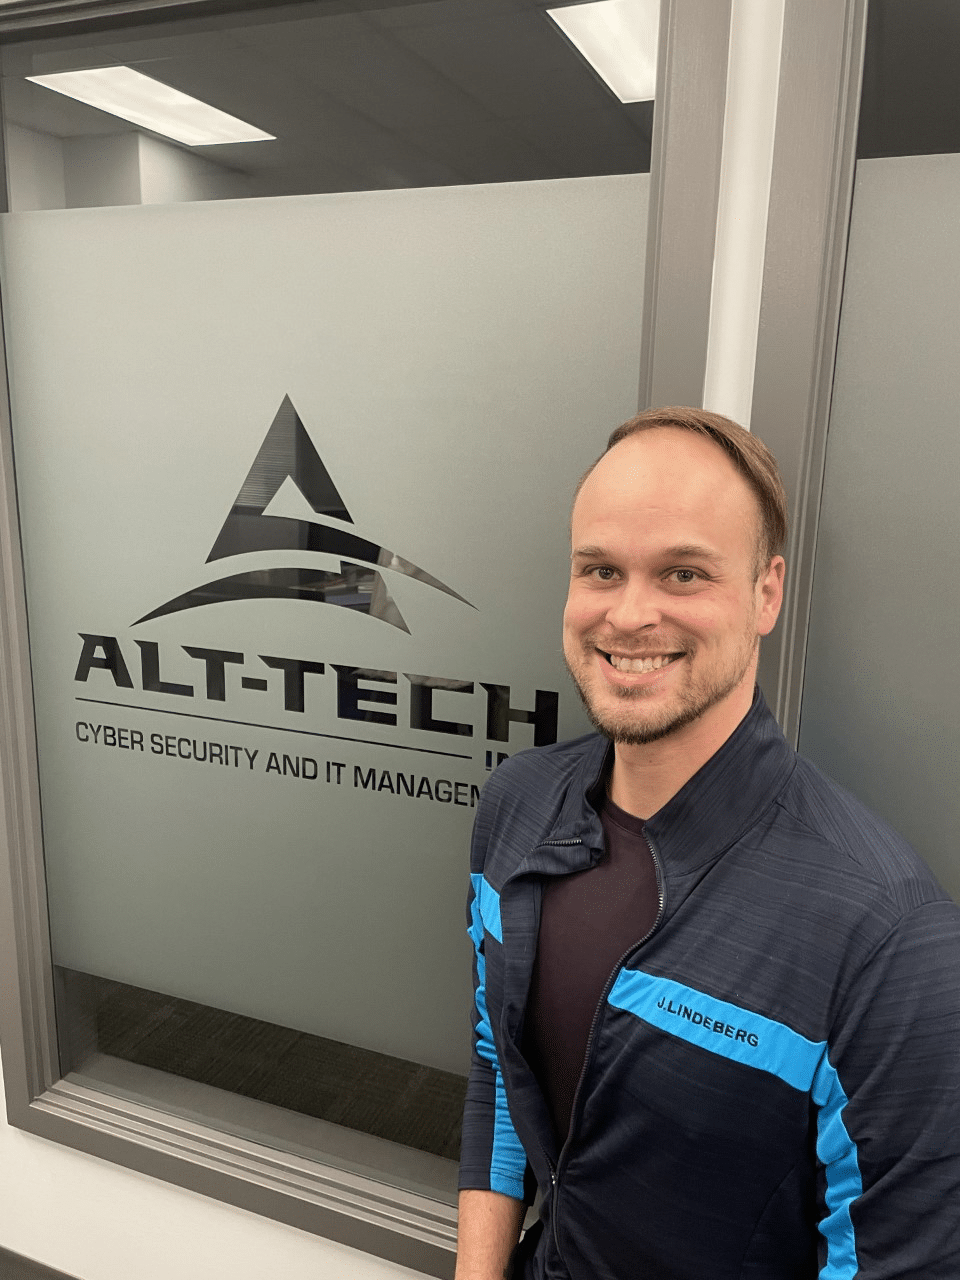 Brett smiling next to alt-tech logo